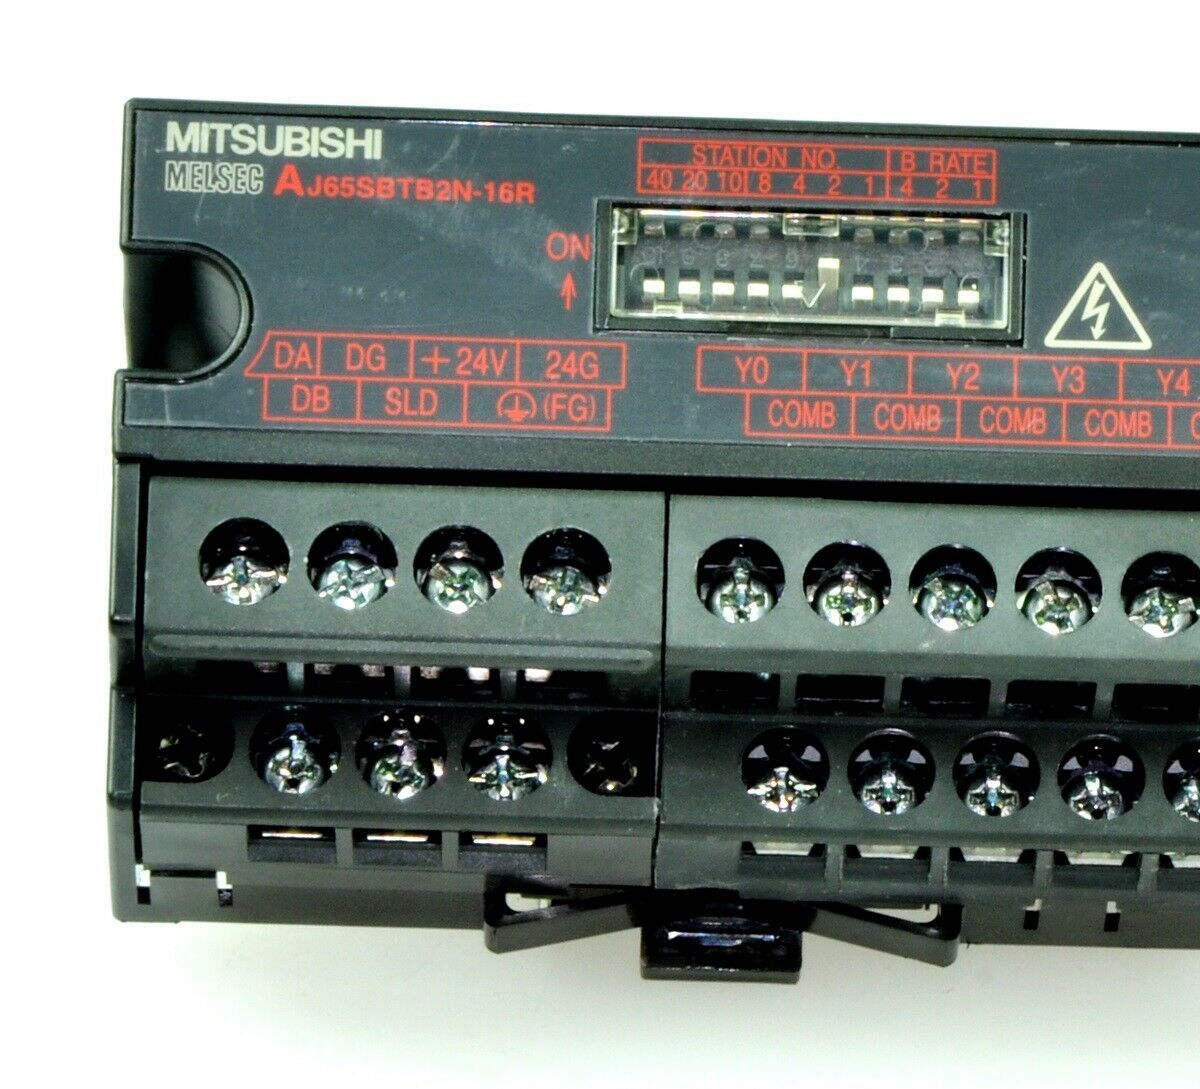 CC-Link output module AJ65SBTB2N-16R Mitsubishi /S 7811 - PLC Input